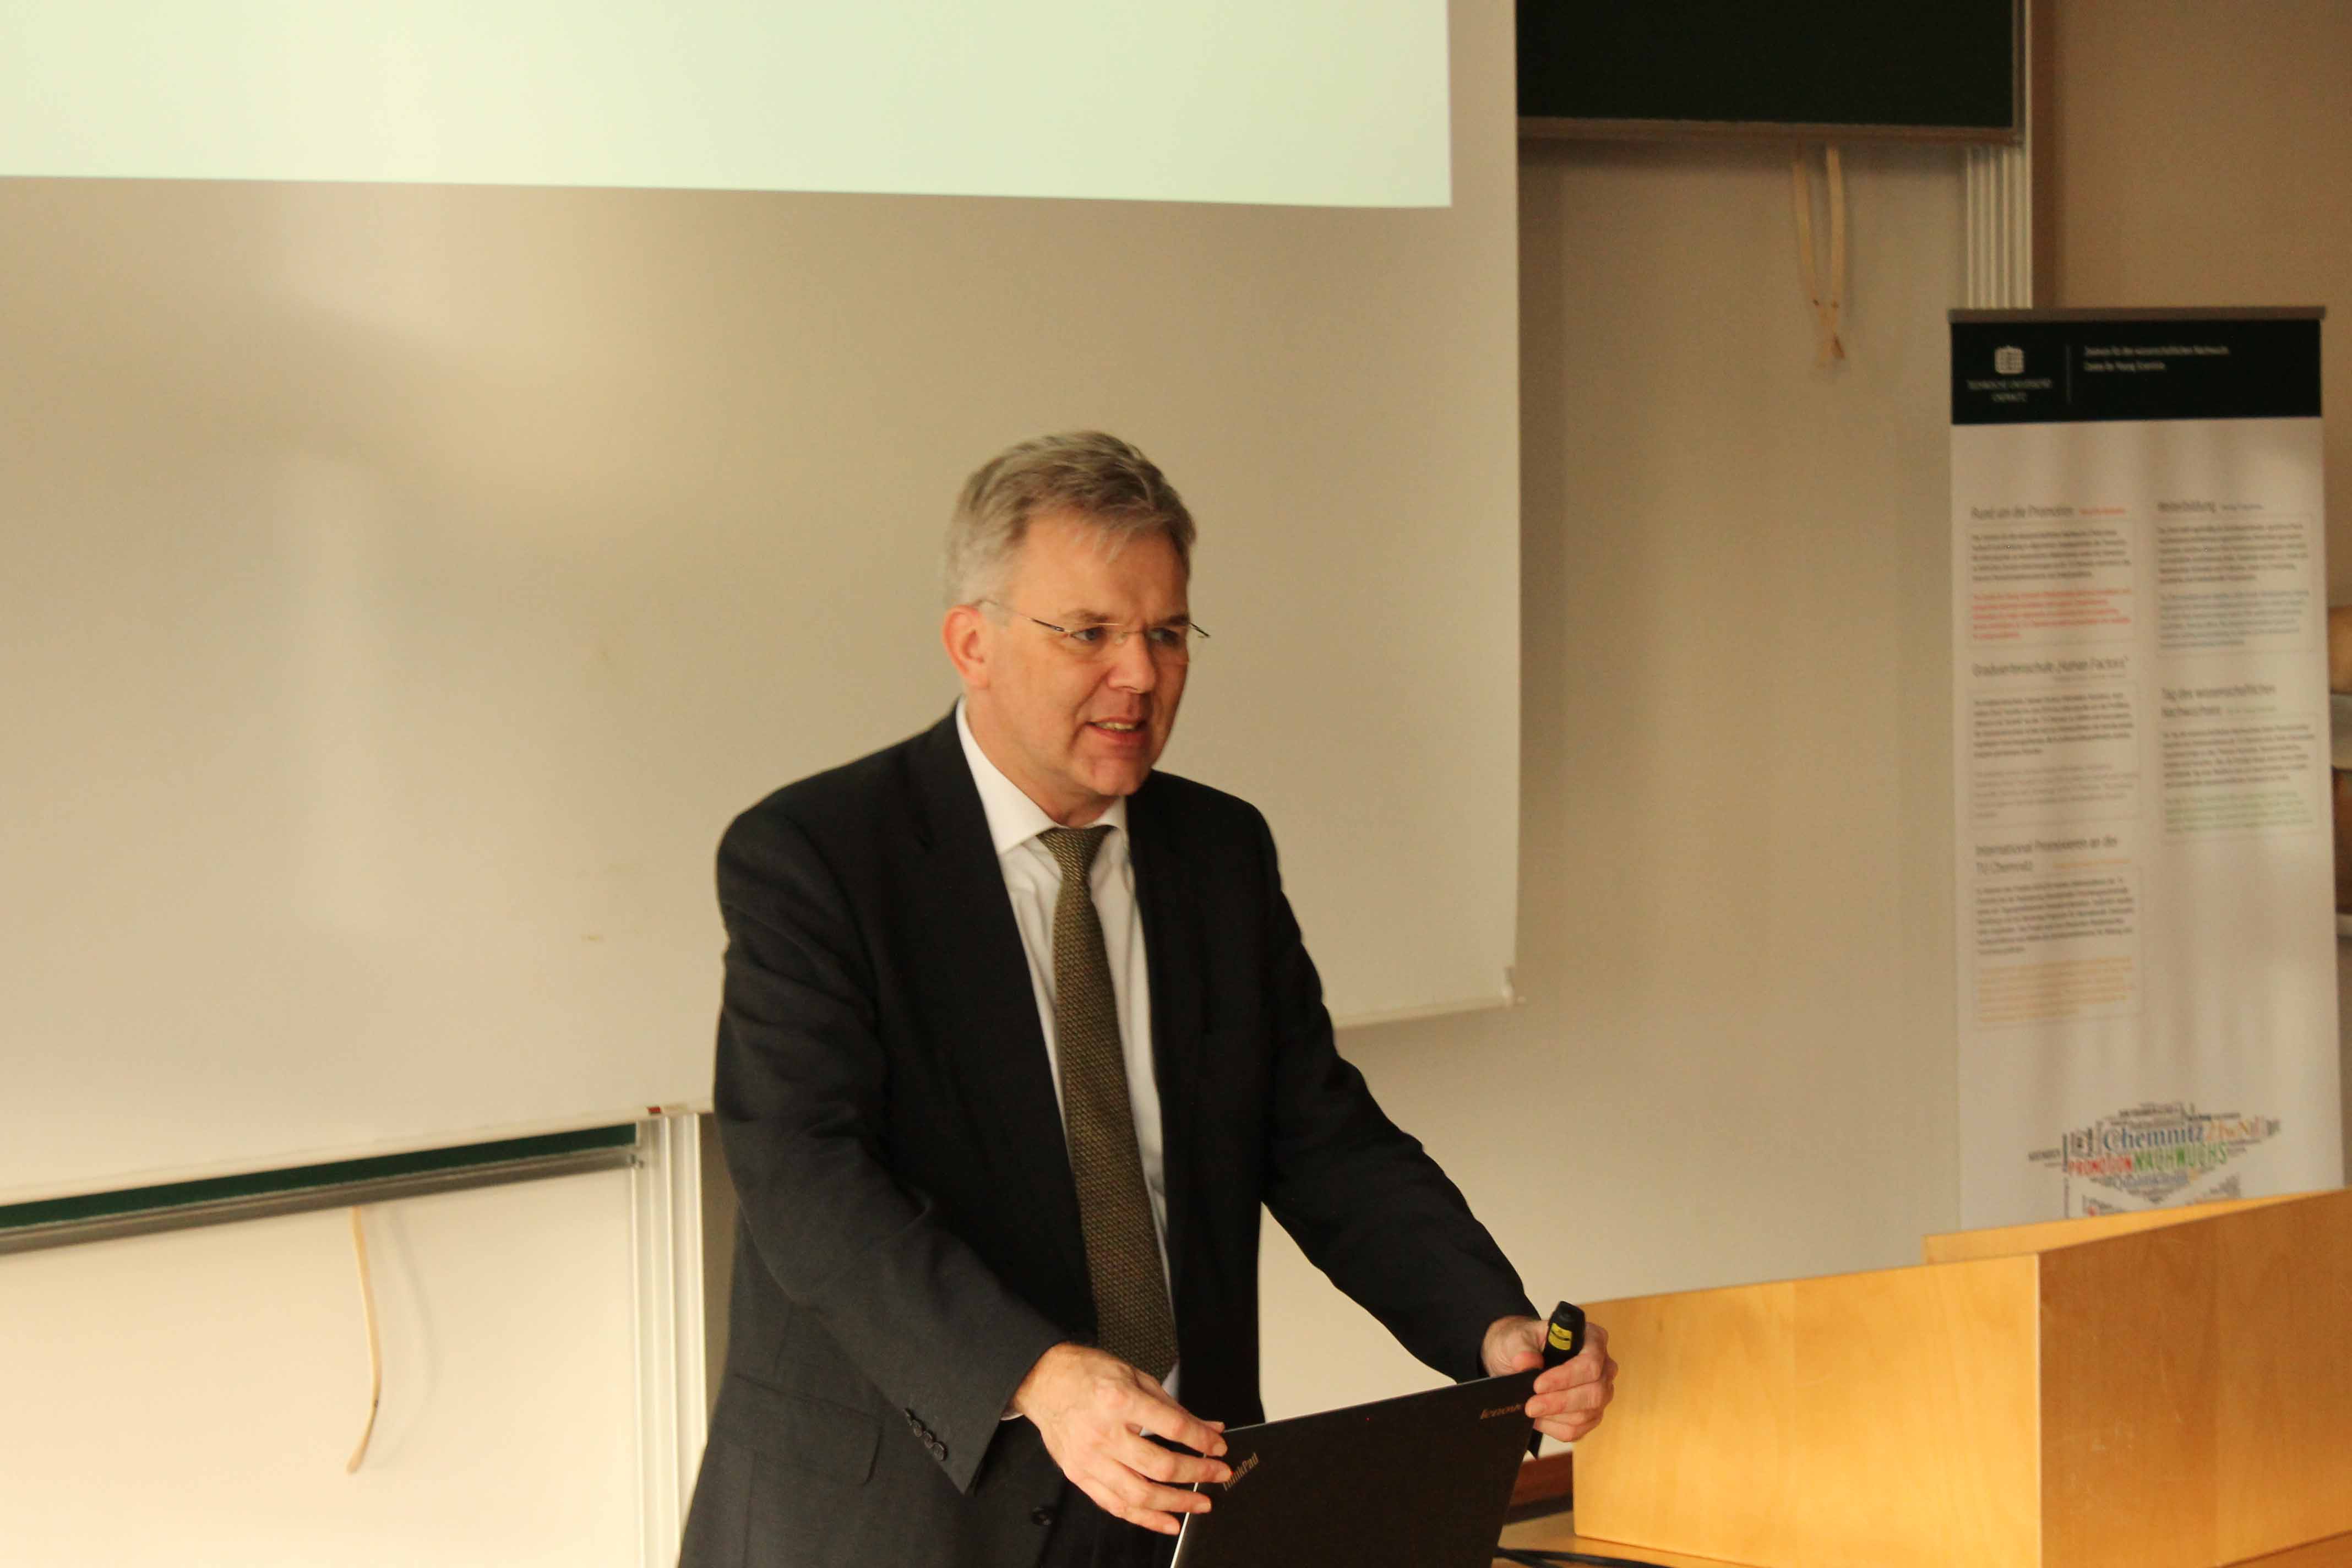 Presentation of the doctoral process: Prof. Dr. Jörn Ihlemann